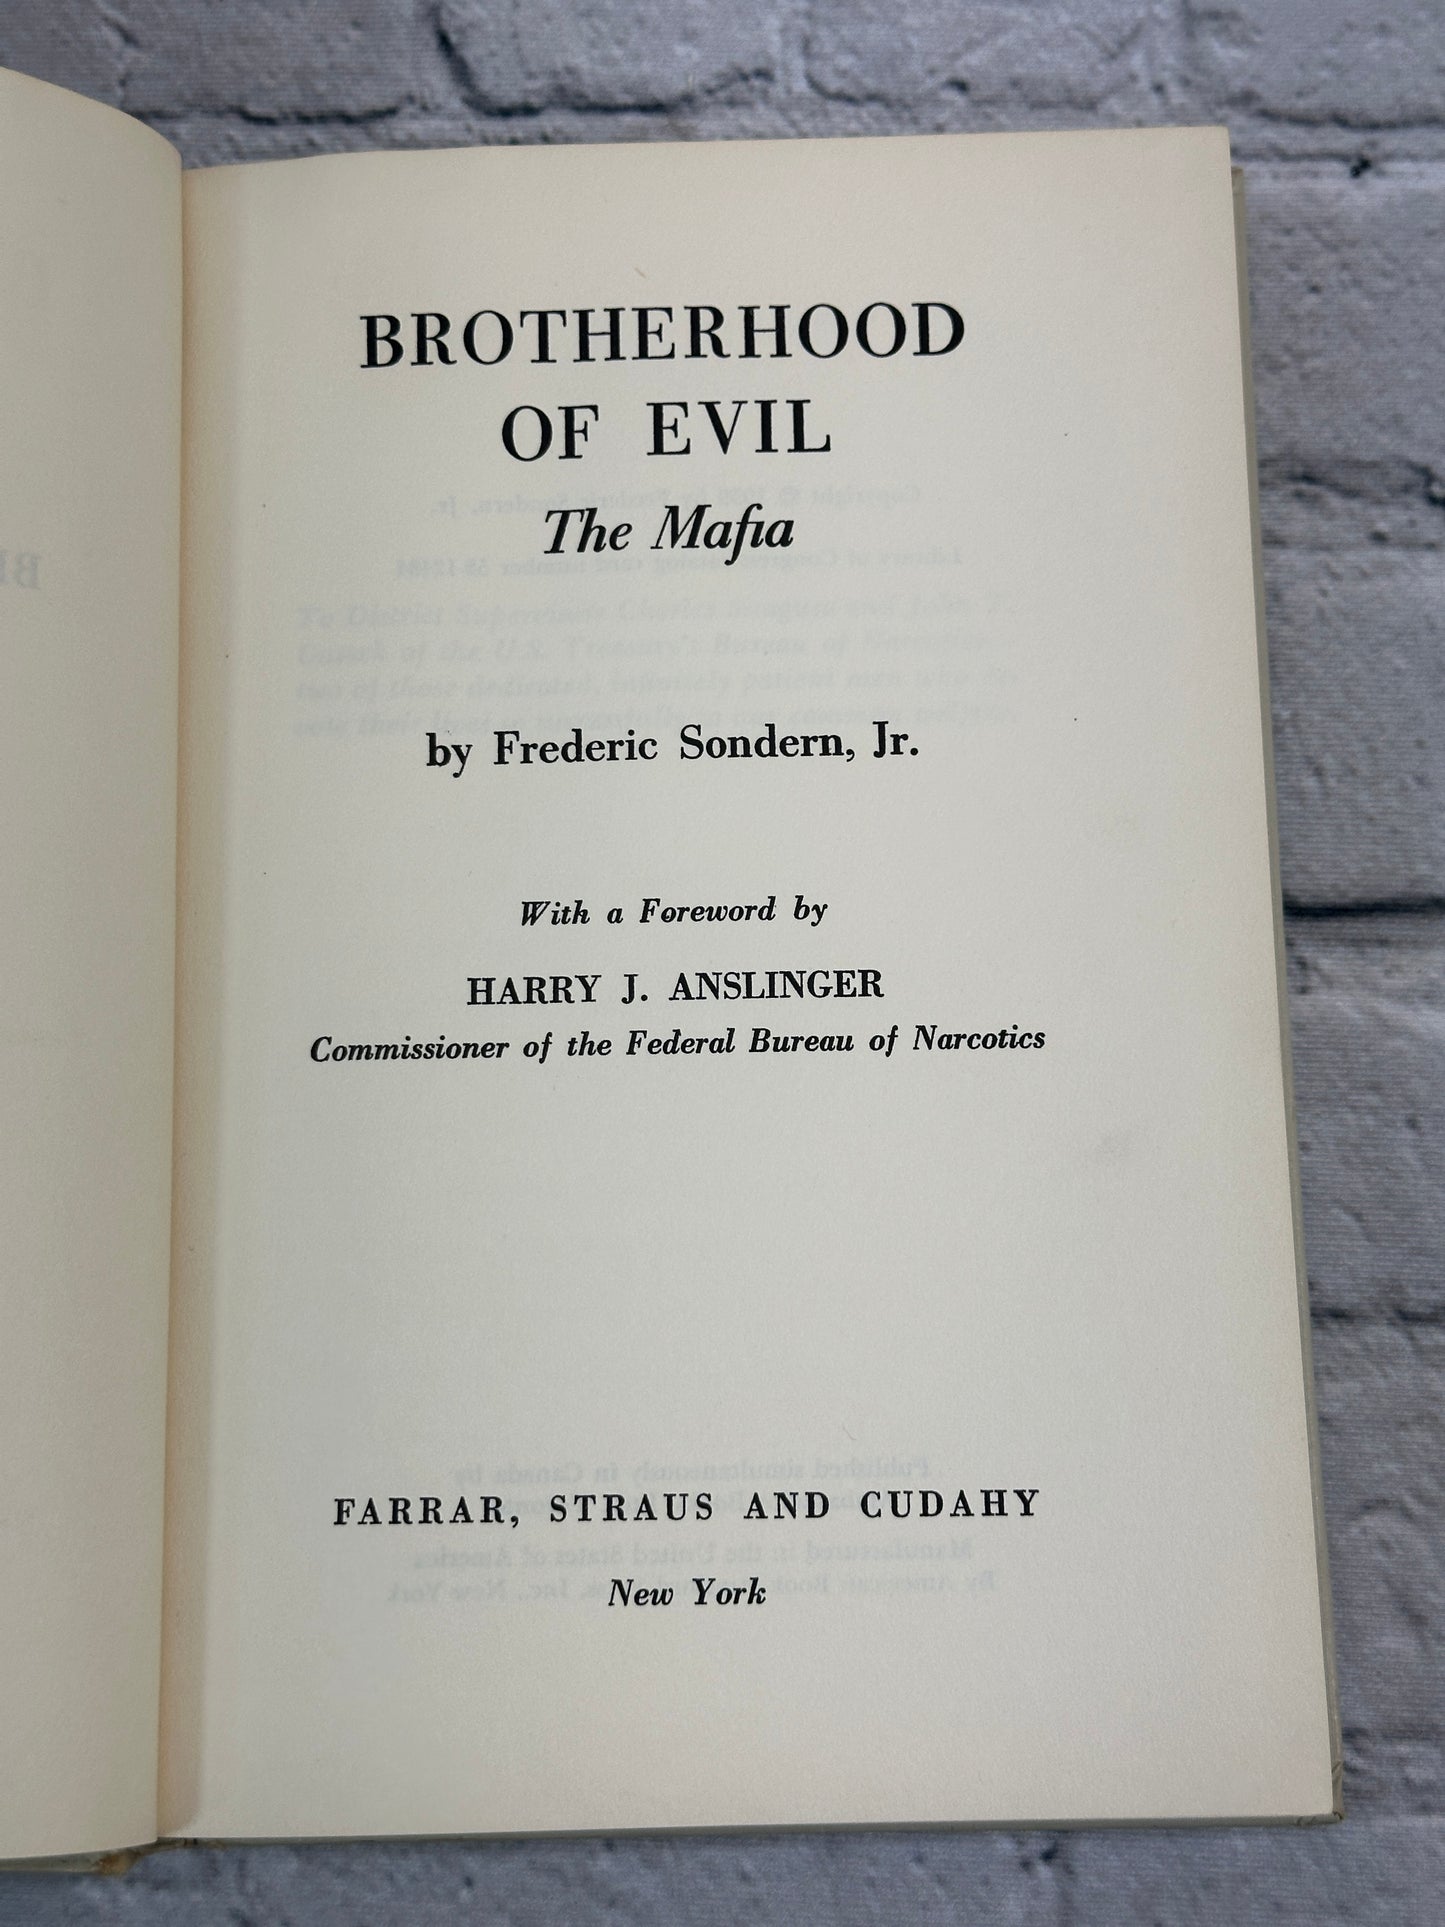 Brotherhood of Evil  The Mafia by Frederic Sondern Jr [1959]